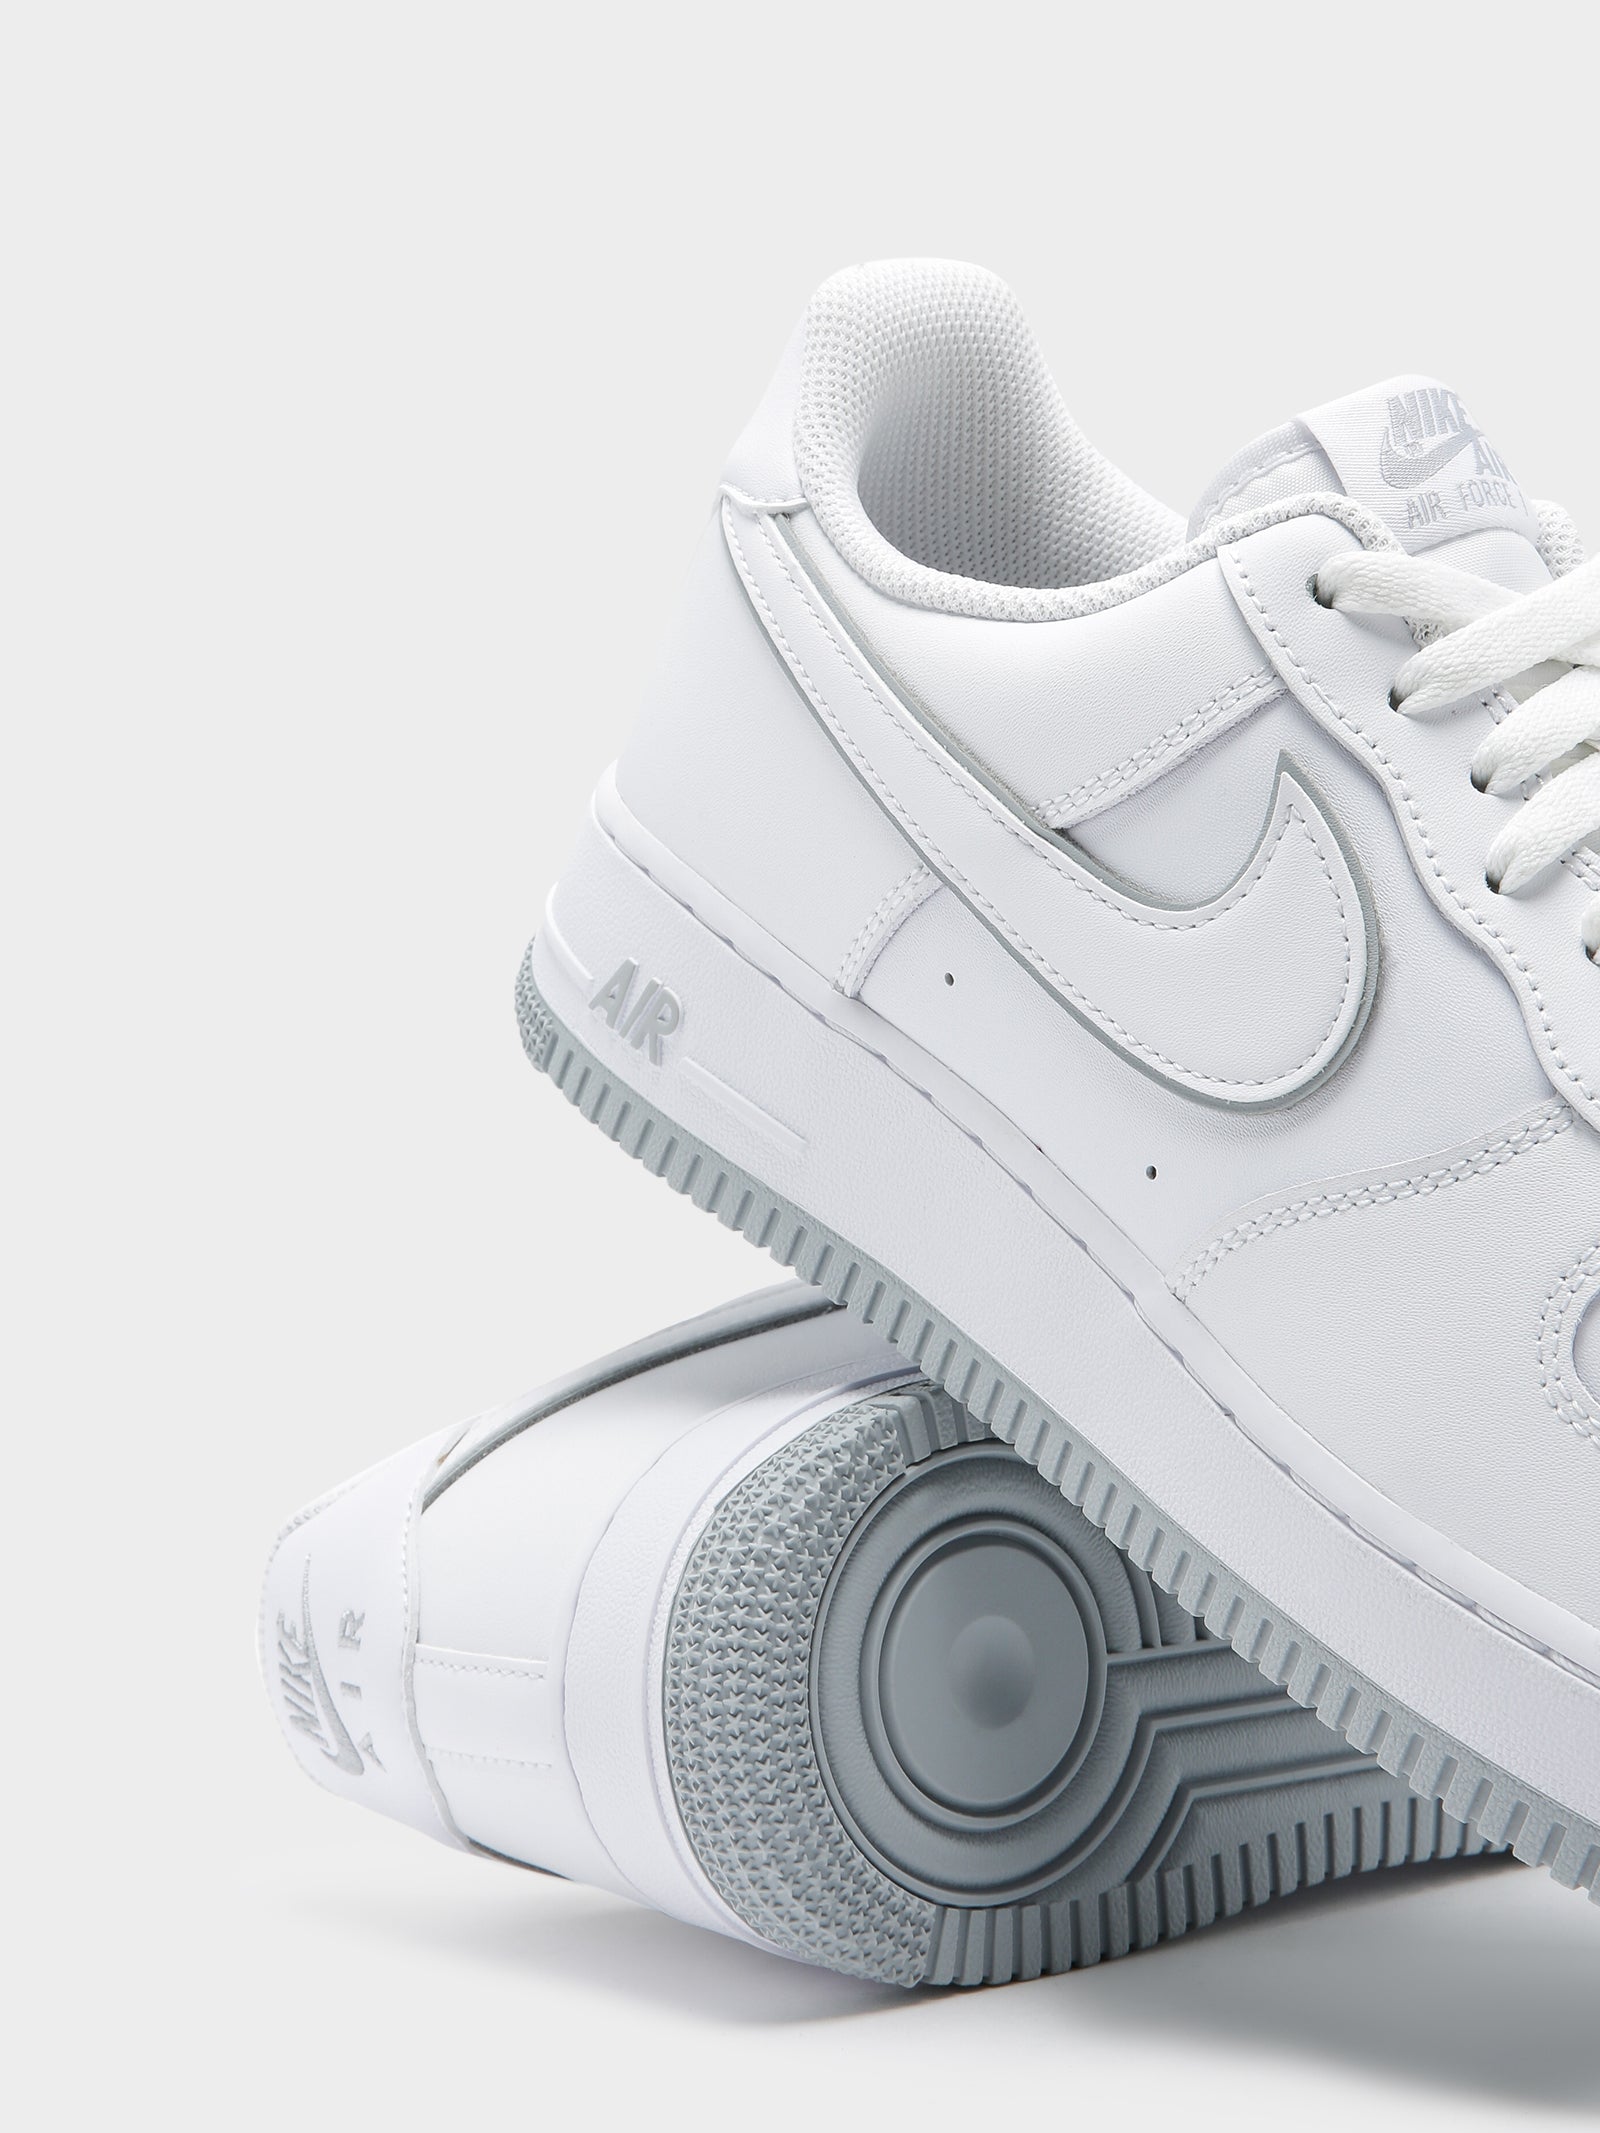 Mens Nike Air Force 1' Sneakers in White & Grey